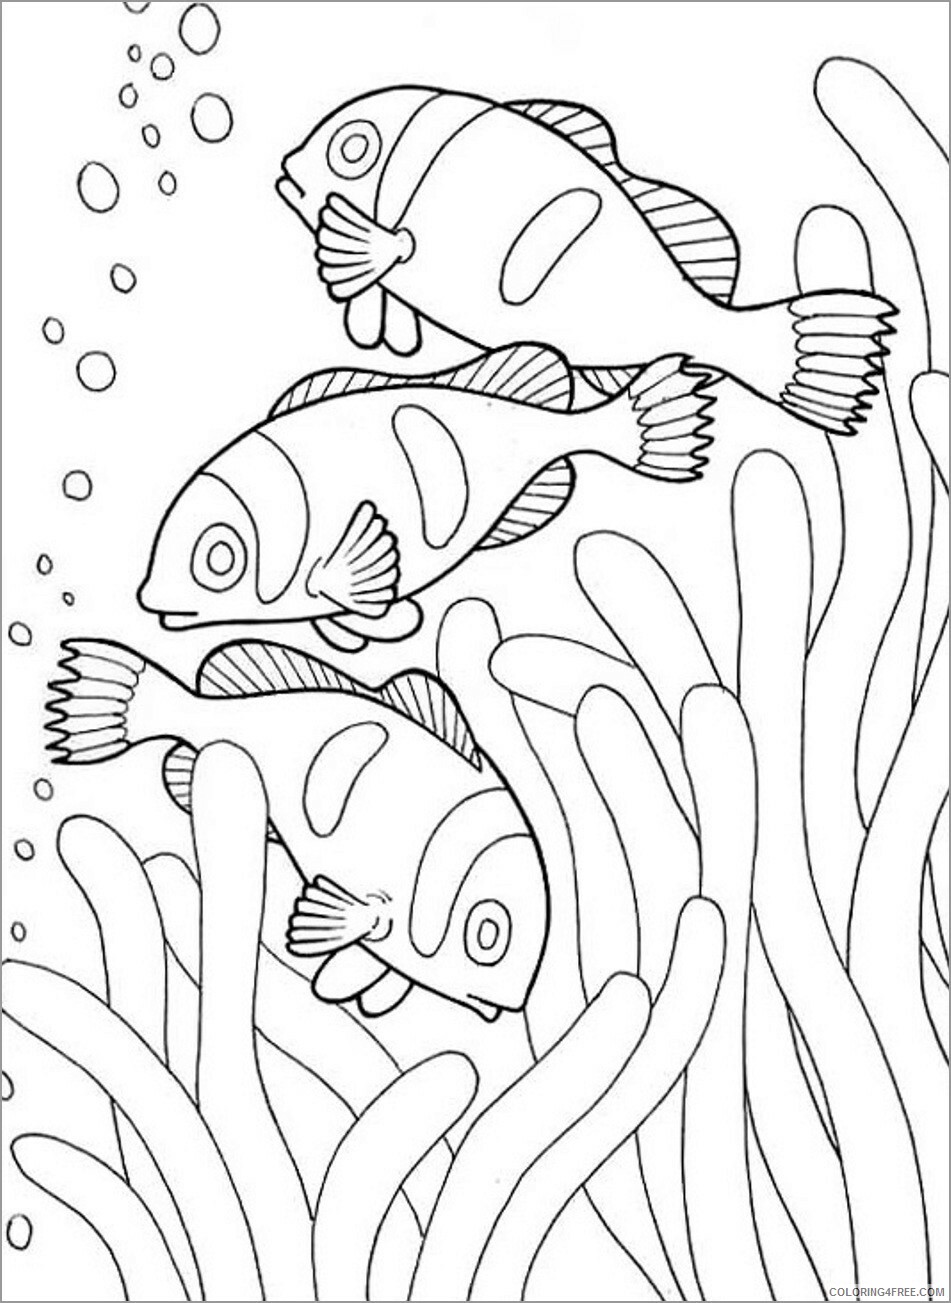 Clownfish Coloring Pages Animal Printable Sheets clown fish 2021 1100 Coloring4free